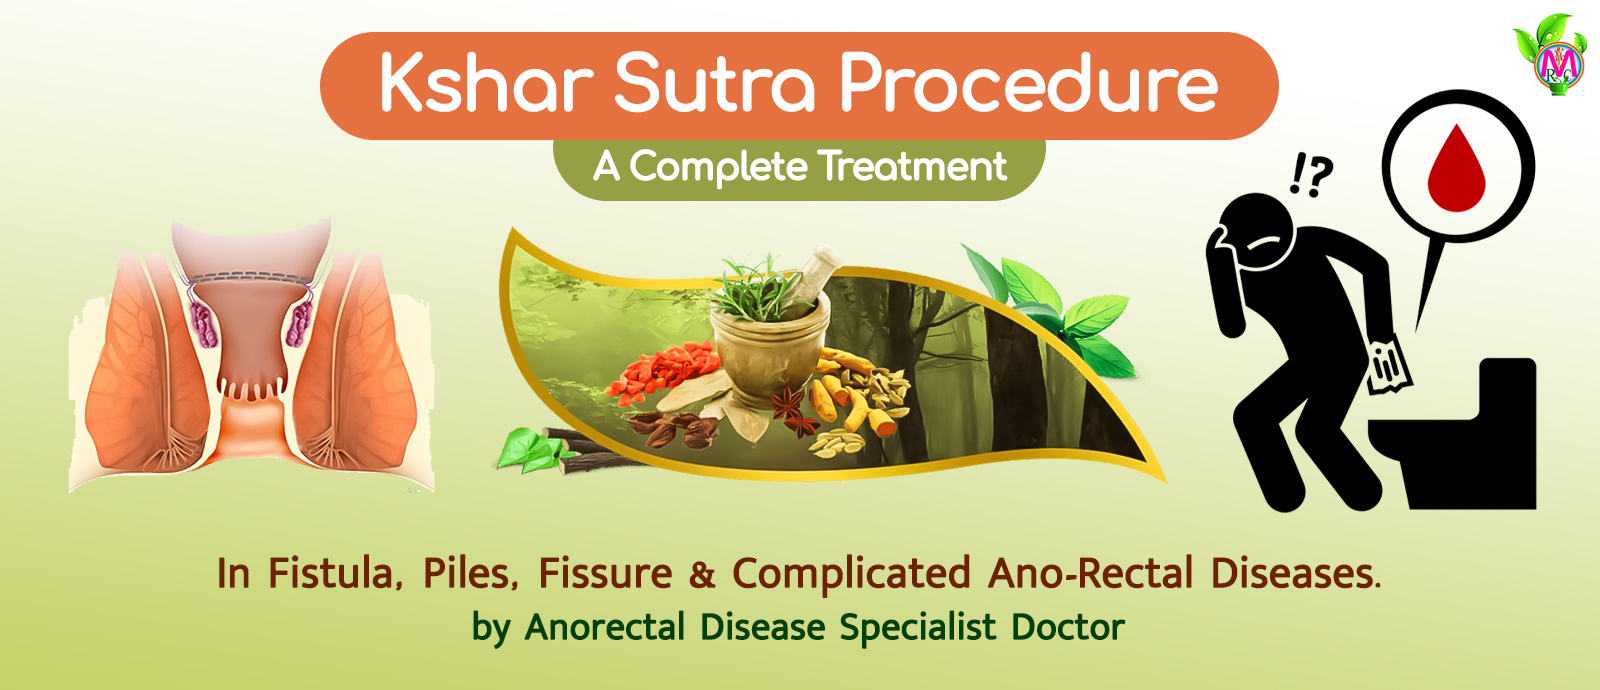 Kshar Sutra Treatment